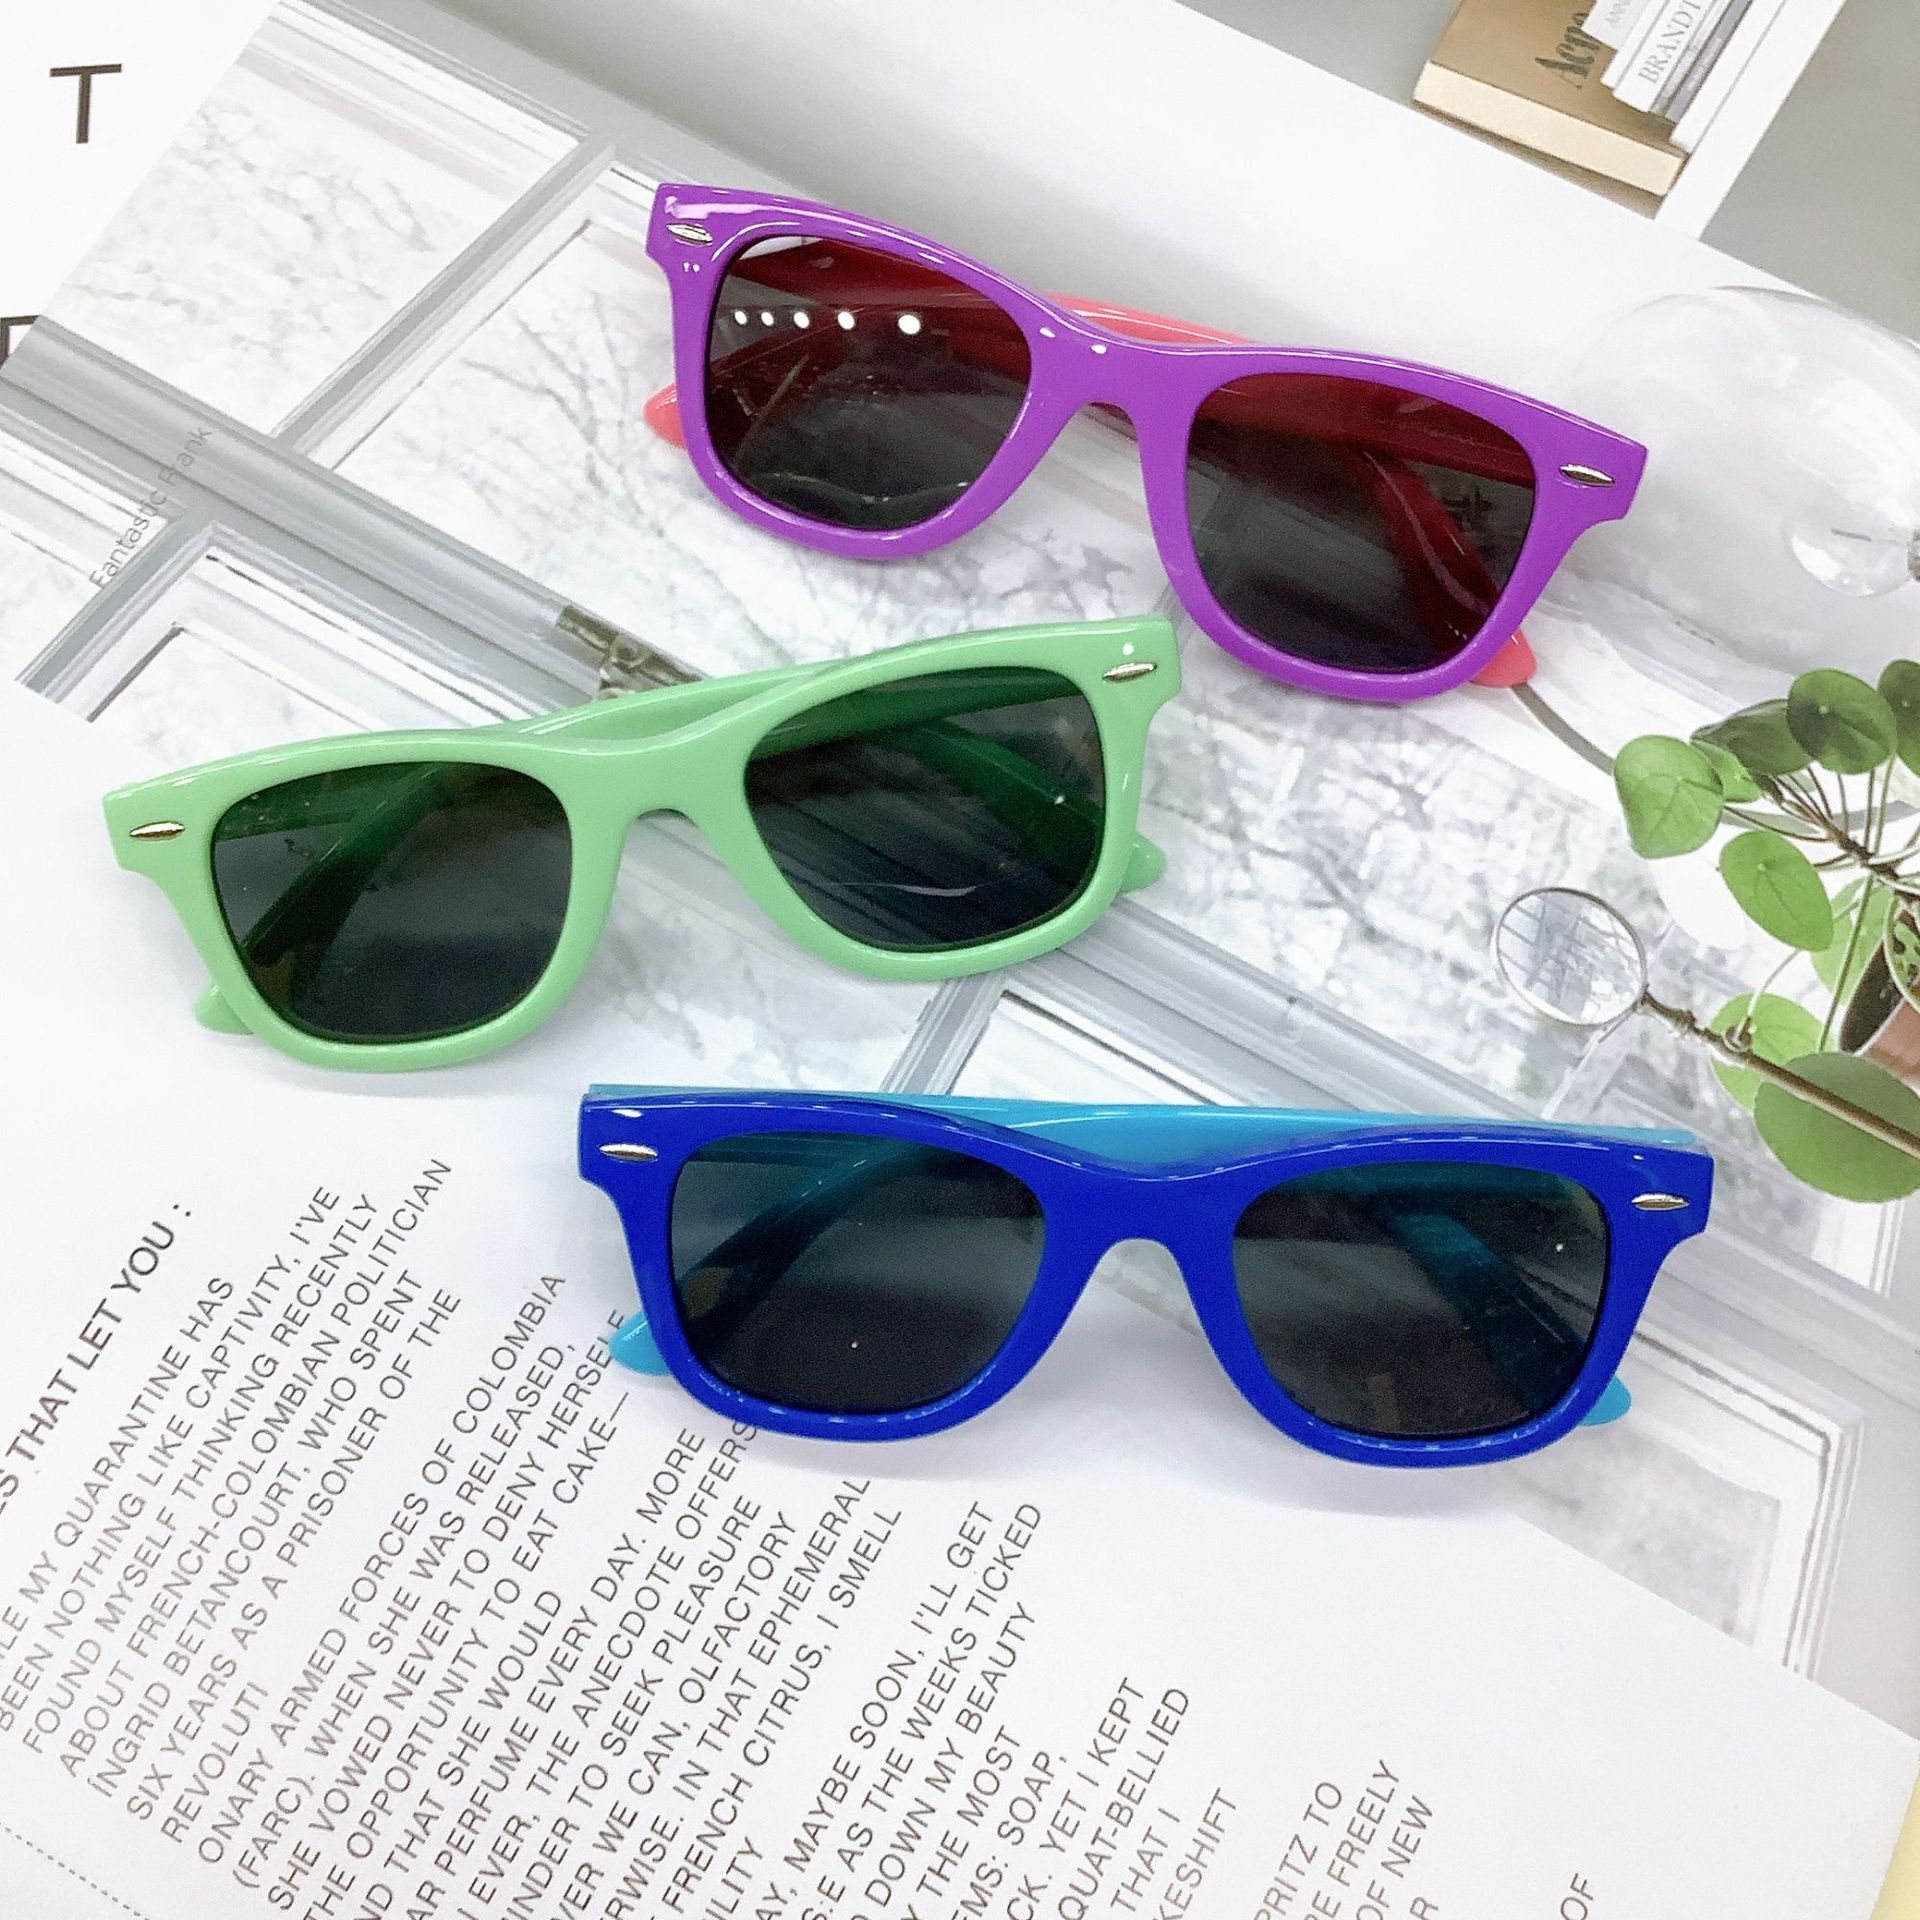 Fashion Kids Sunglasses Silicone Soft Frame Polarized Kids' Sunglasses Travel Anti-Glare Eye Protection UV Protection Sunglasses